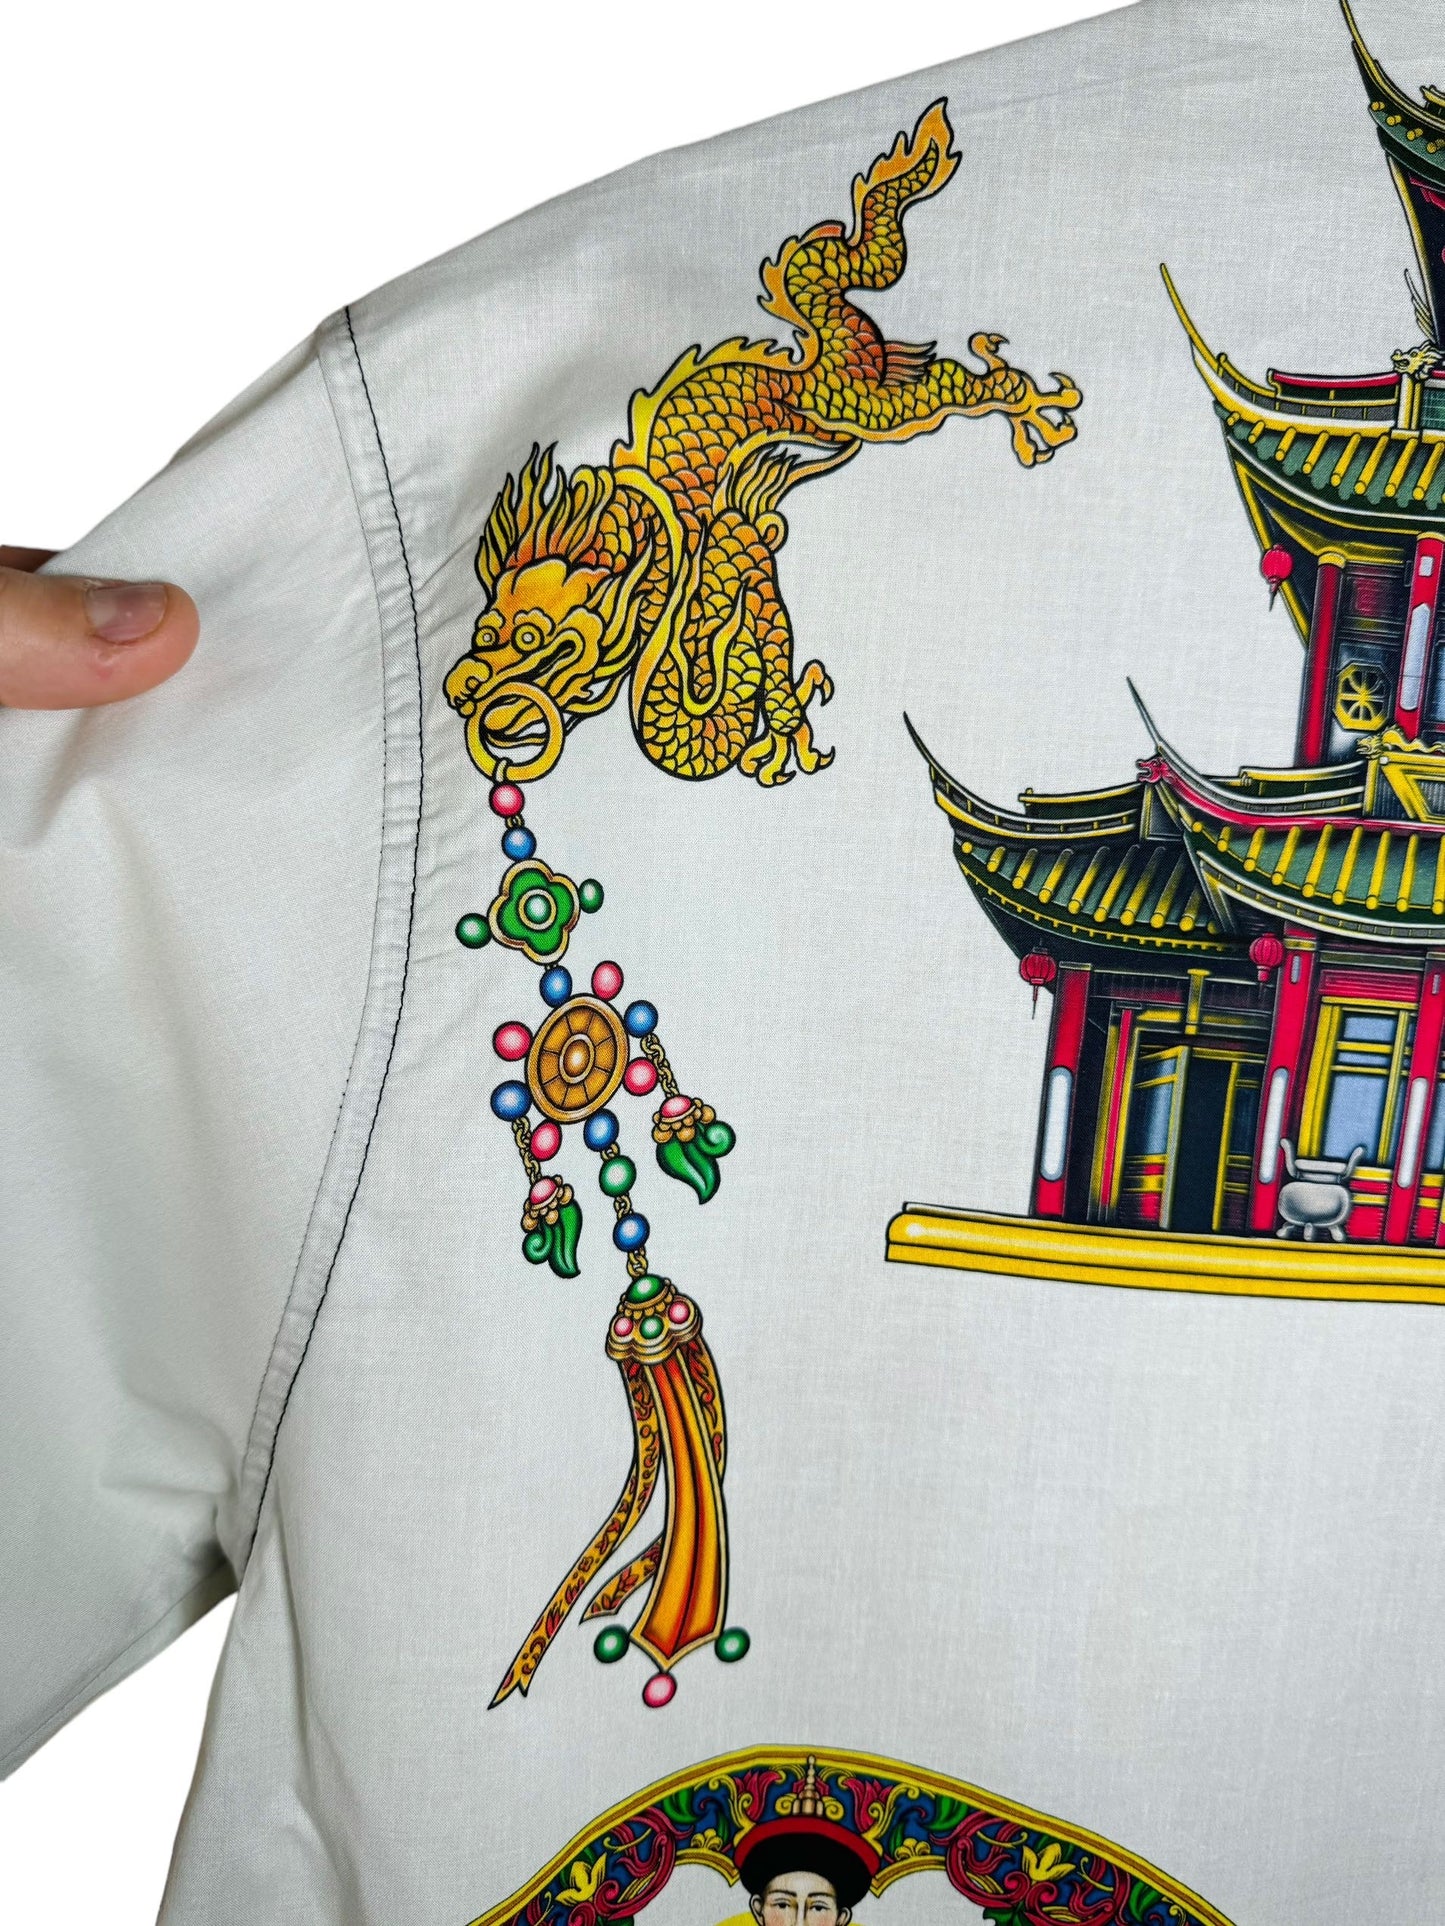 China Emperor Beatbox Vintage shirt